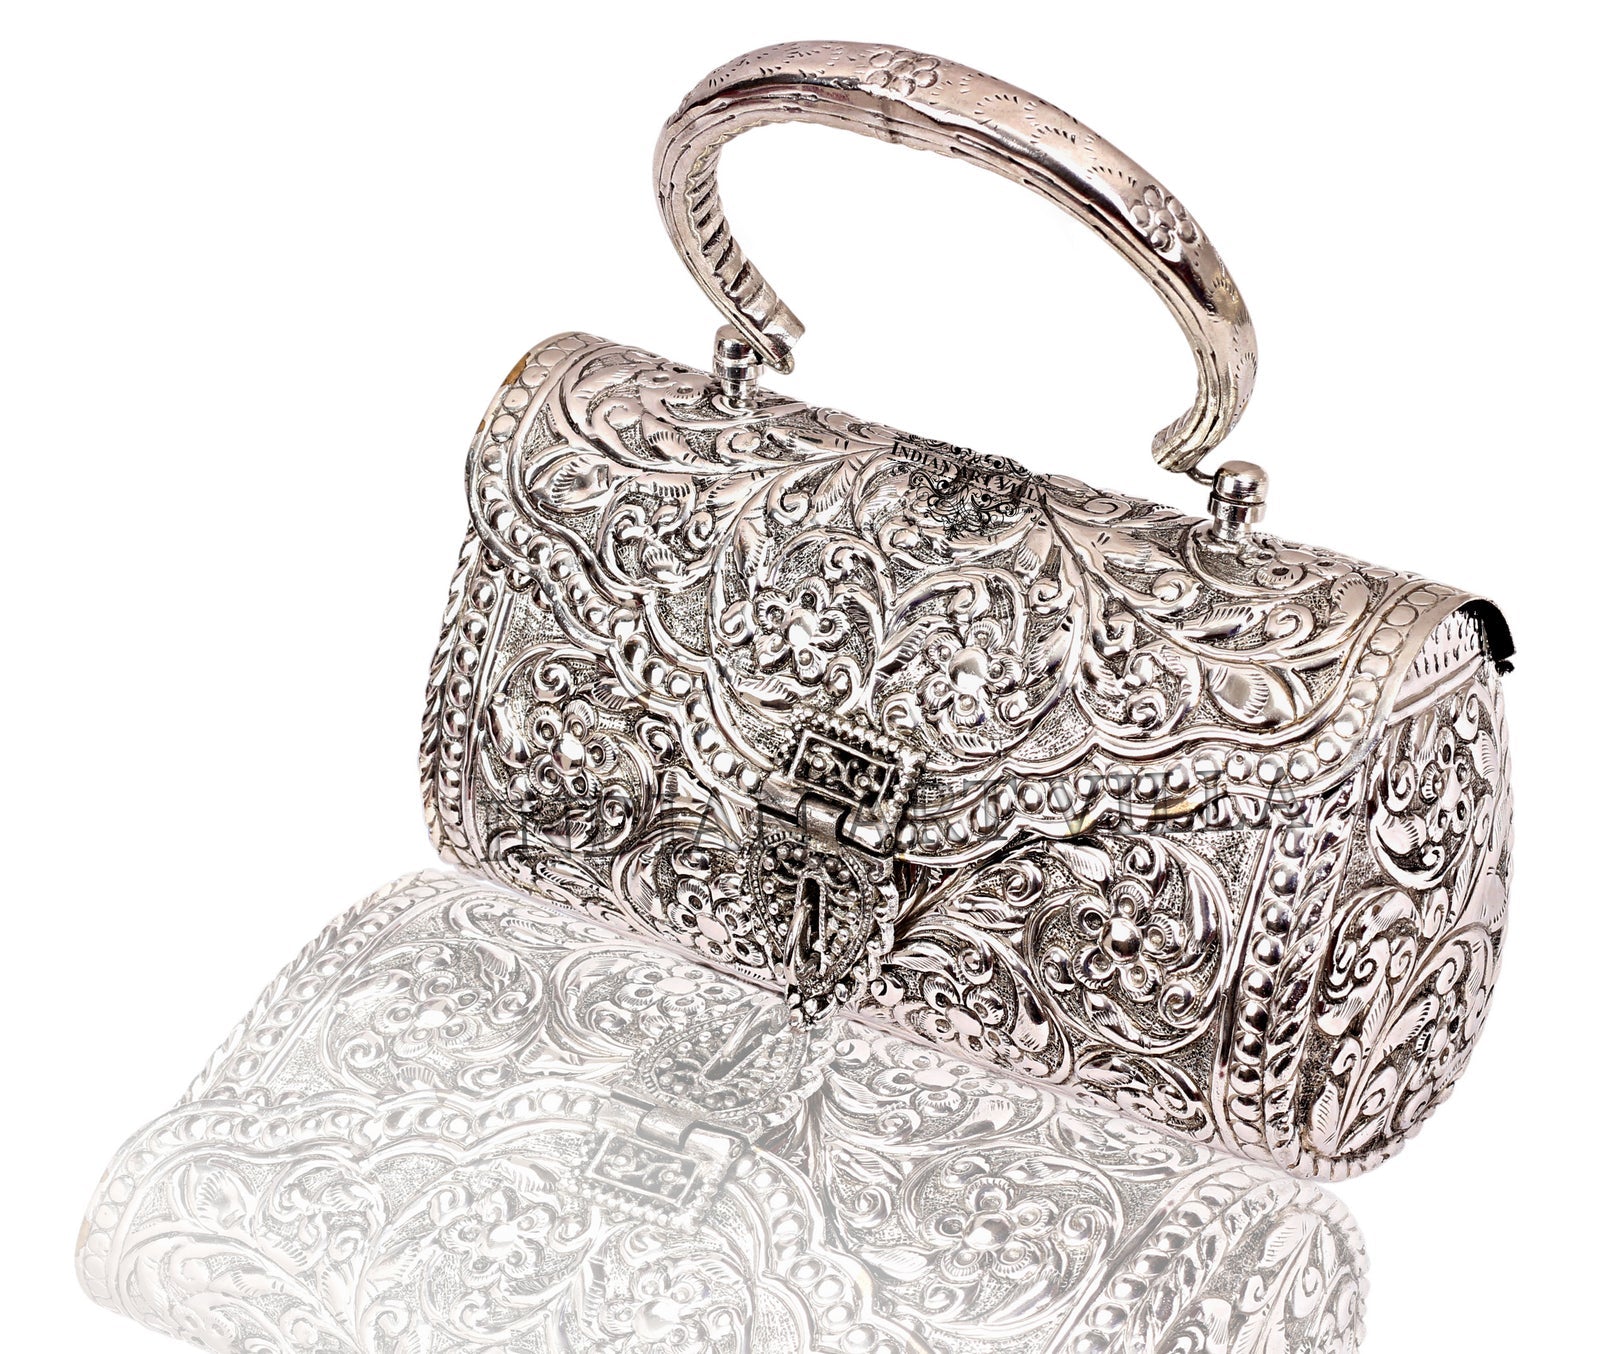 Vintage Sterling Silver Handbag Purse Charm | eBay